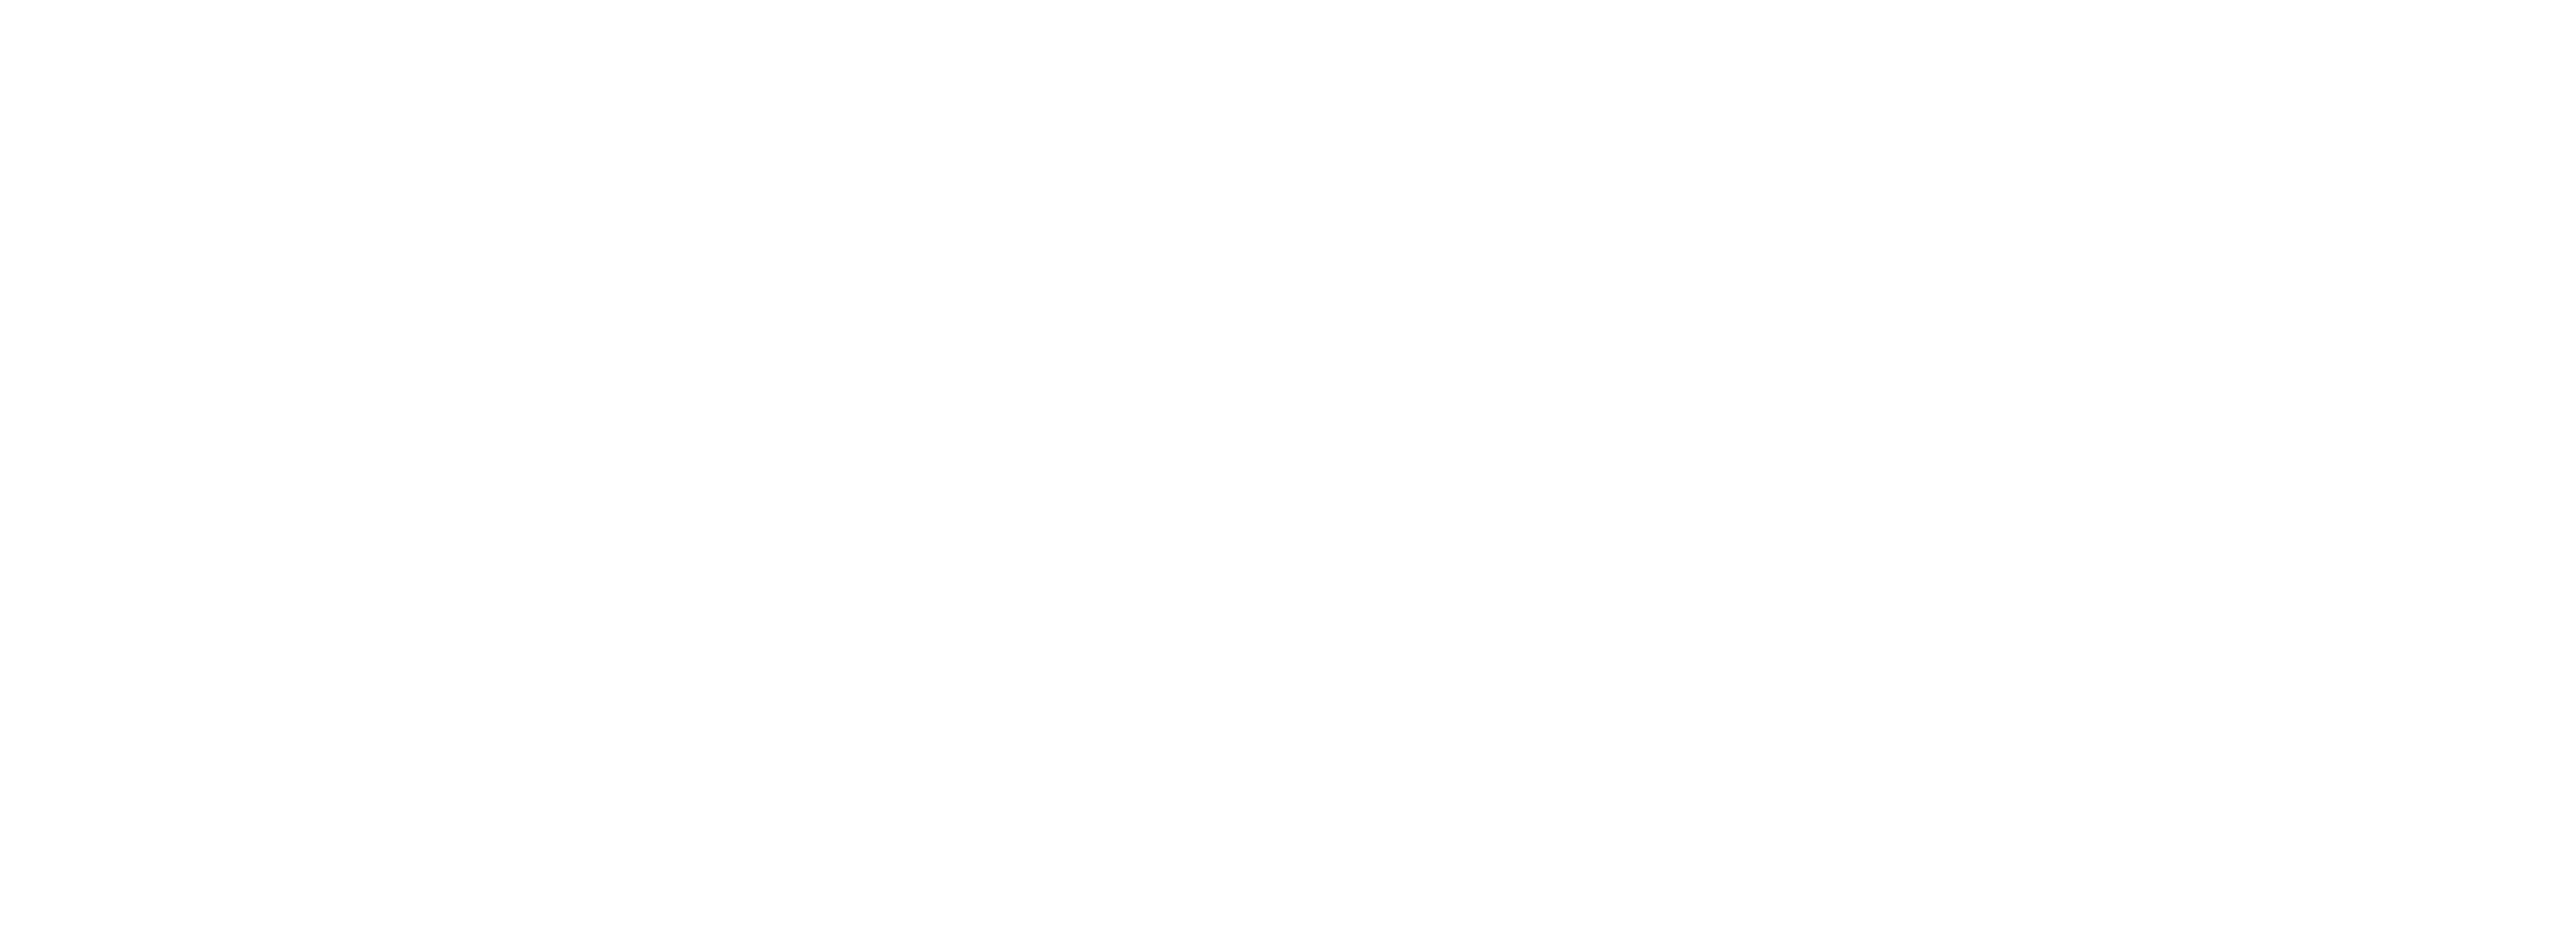 wolf stuff white logo